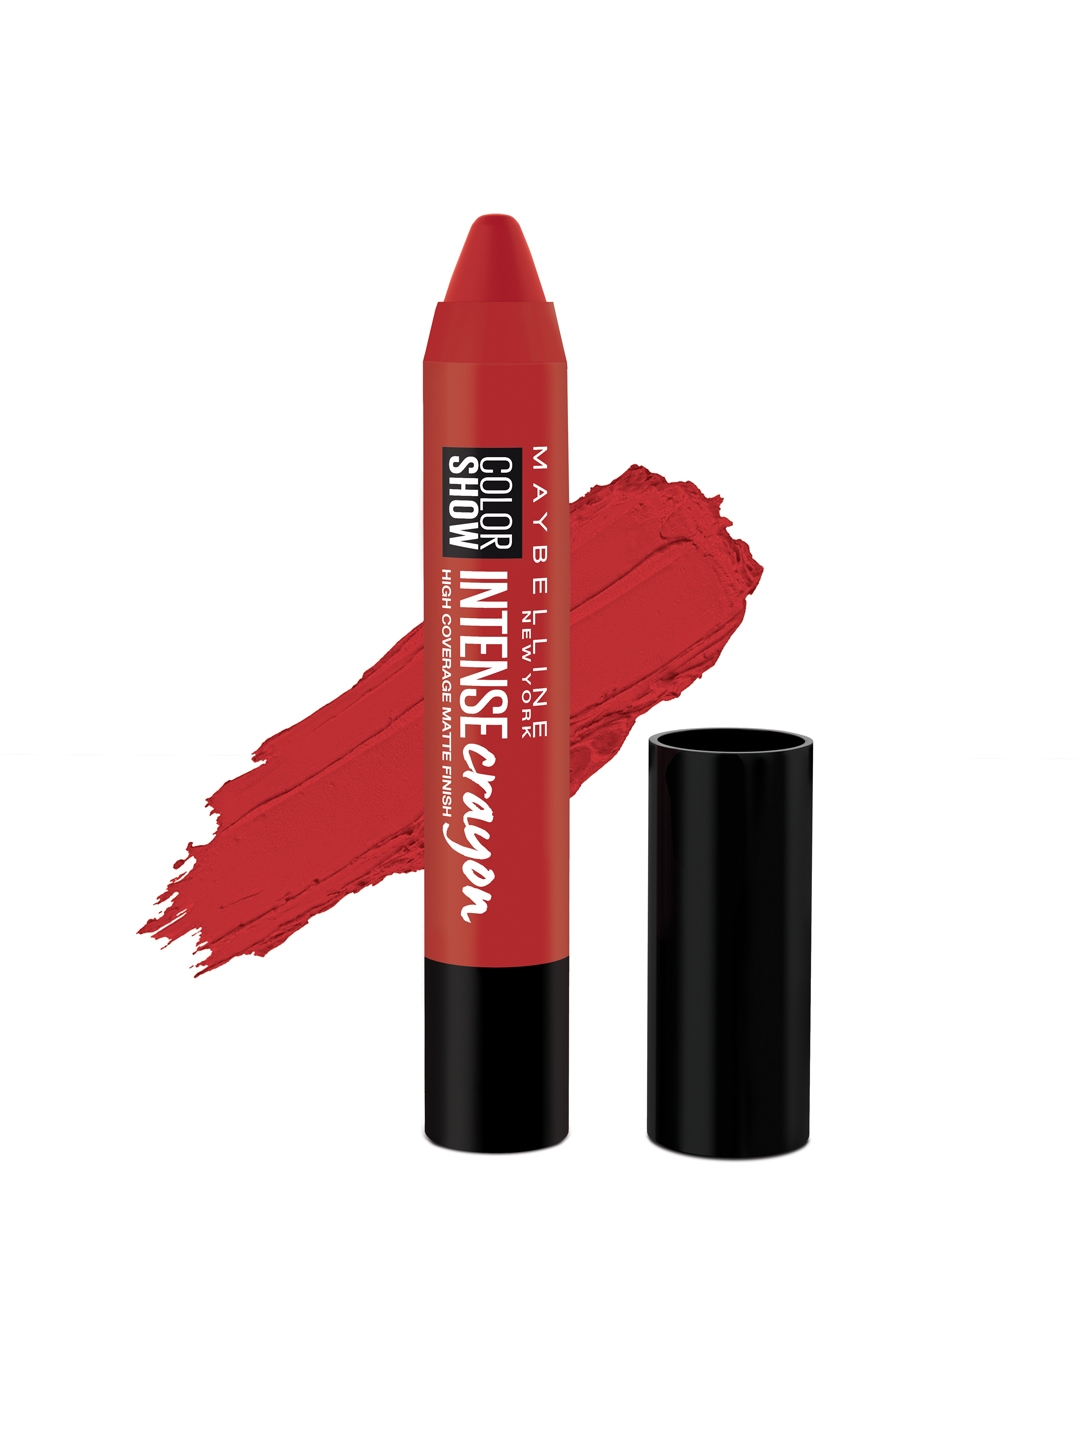 Maybelline Color Show Intense Crayon Lipstick   308 Deep Coral